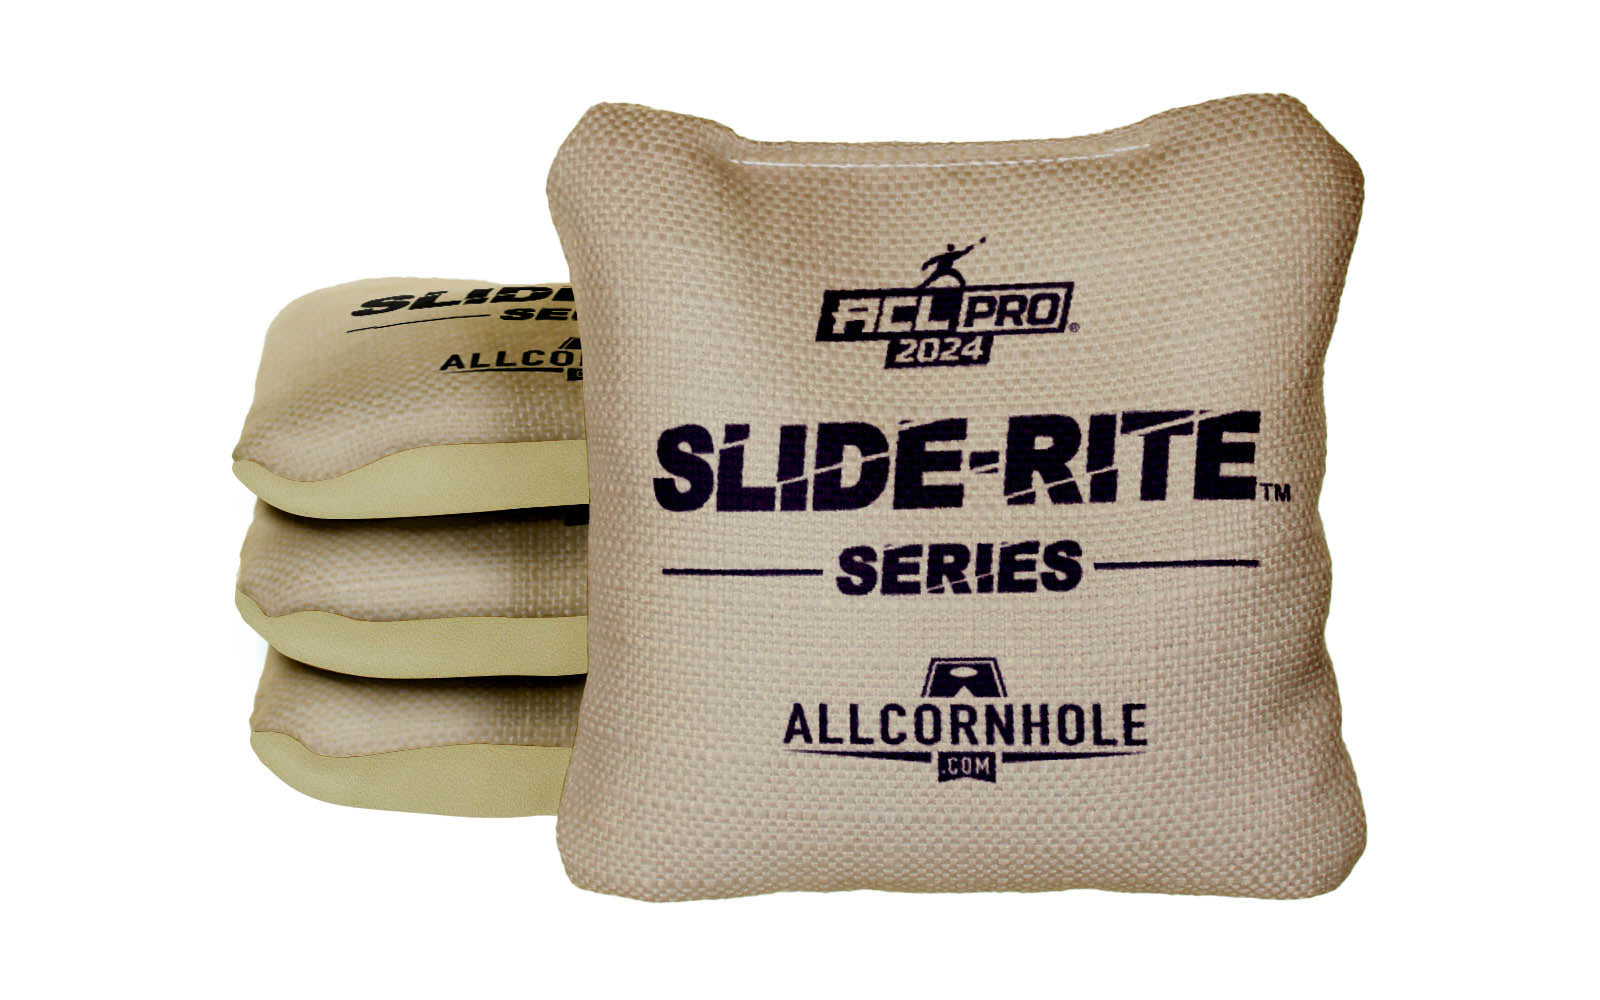 Officially Licensed Collegiate Cornhole Bags - Slide Rite - Set of 4 - Wake Forest University